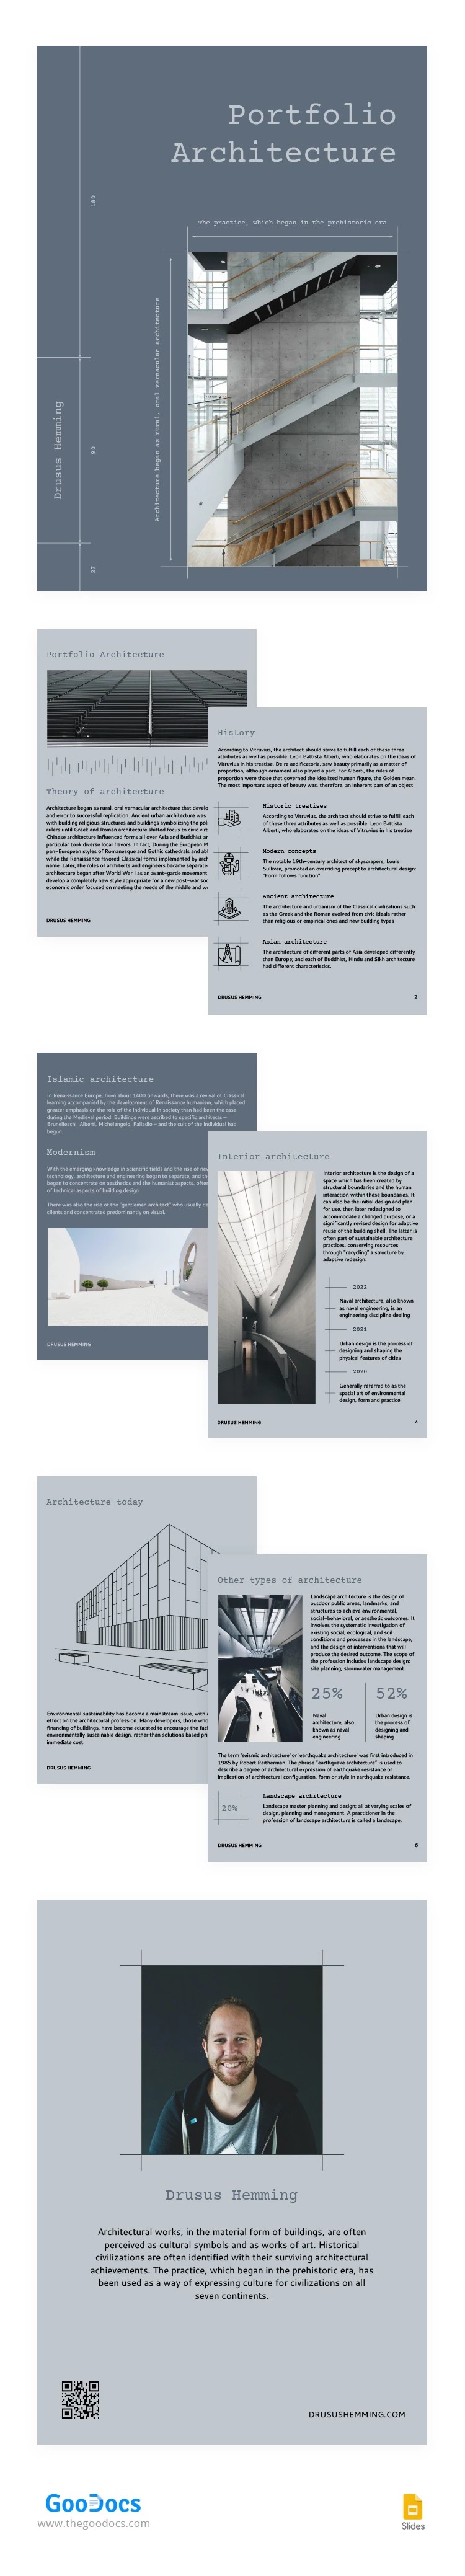 Moderne Portfolio-Architektur - free Google Docs Template - 10064367